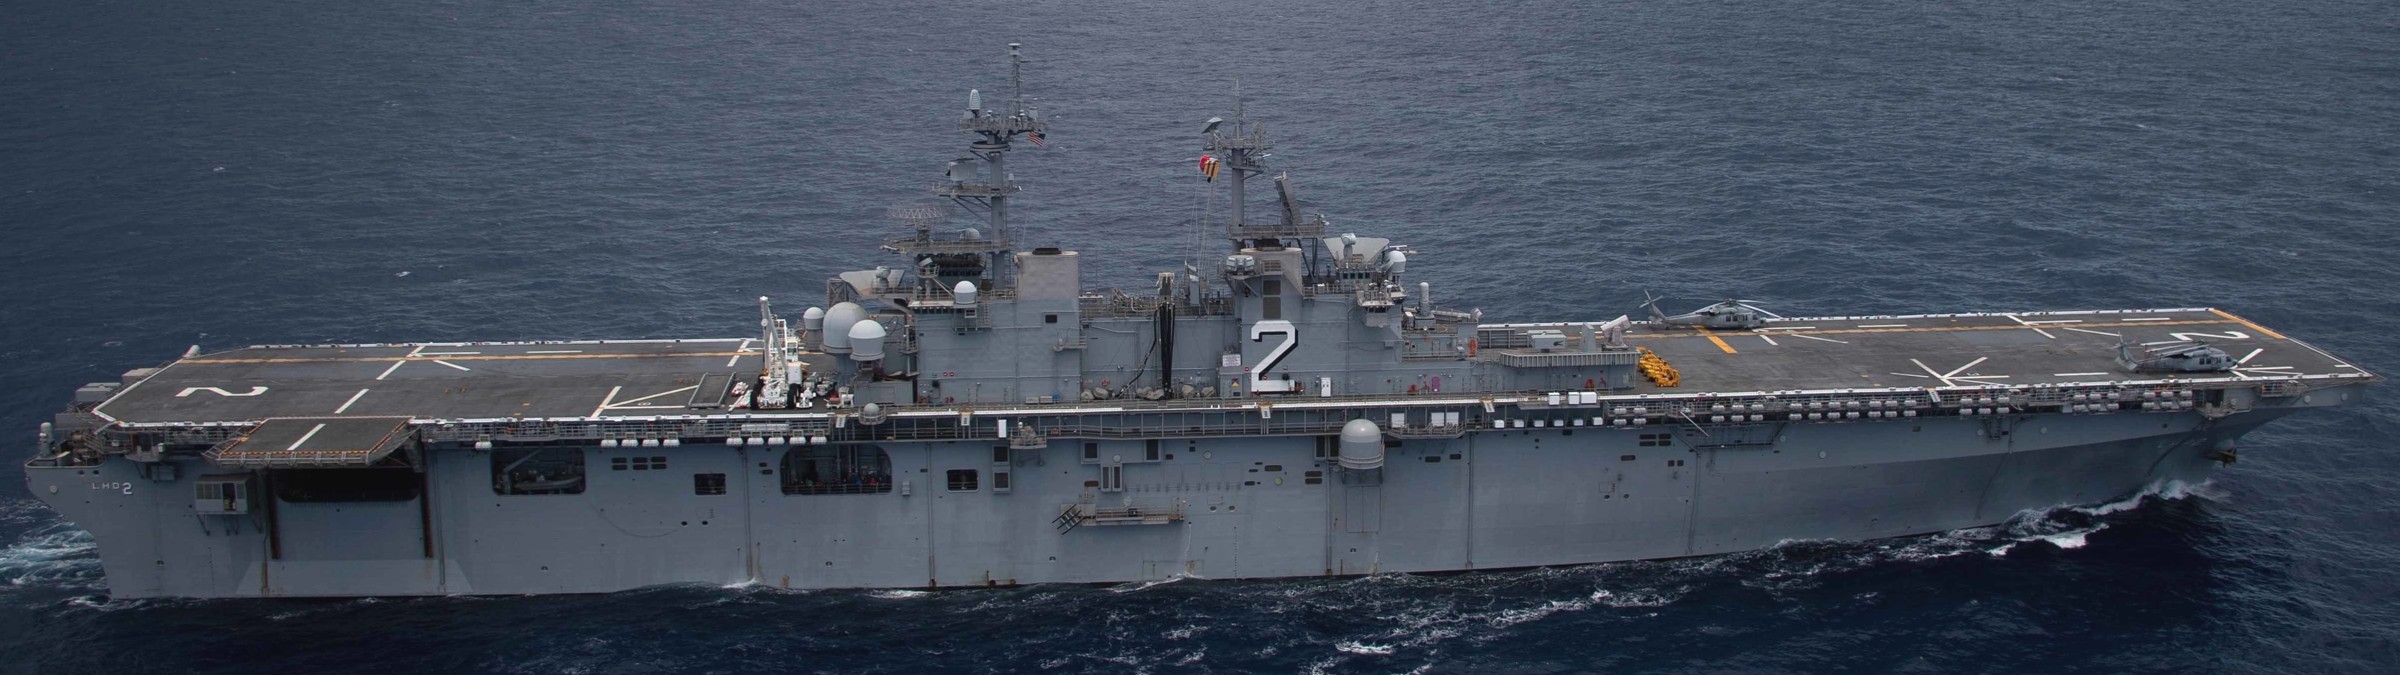 lhd-2 uss essex wasp class amphibious assault ship landing helicopter us navy marines rimpac 2020 201